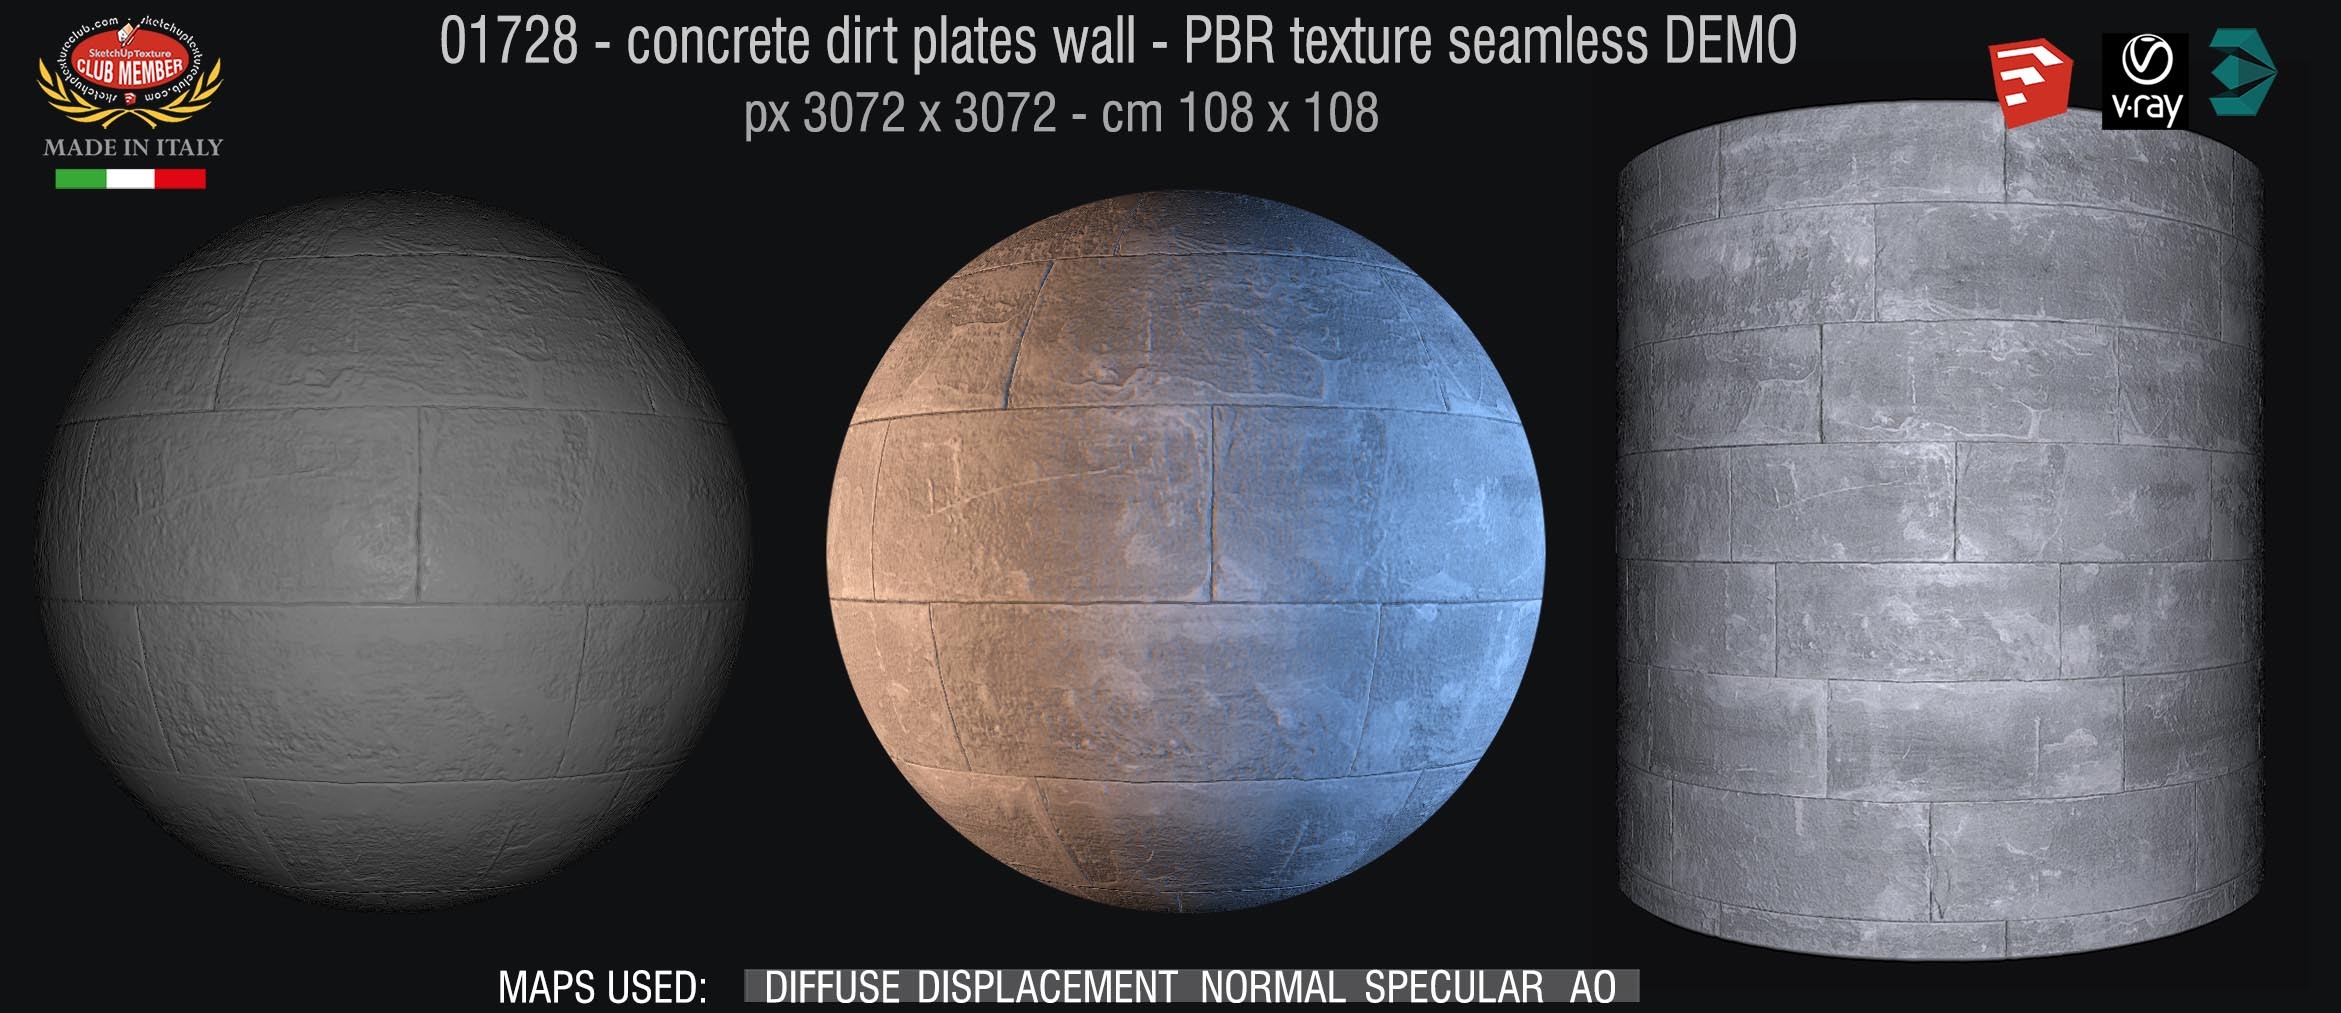 01728 concrete dirt plates wall PBR texture seamless DEMO